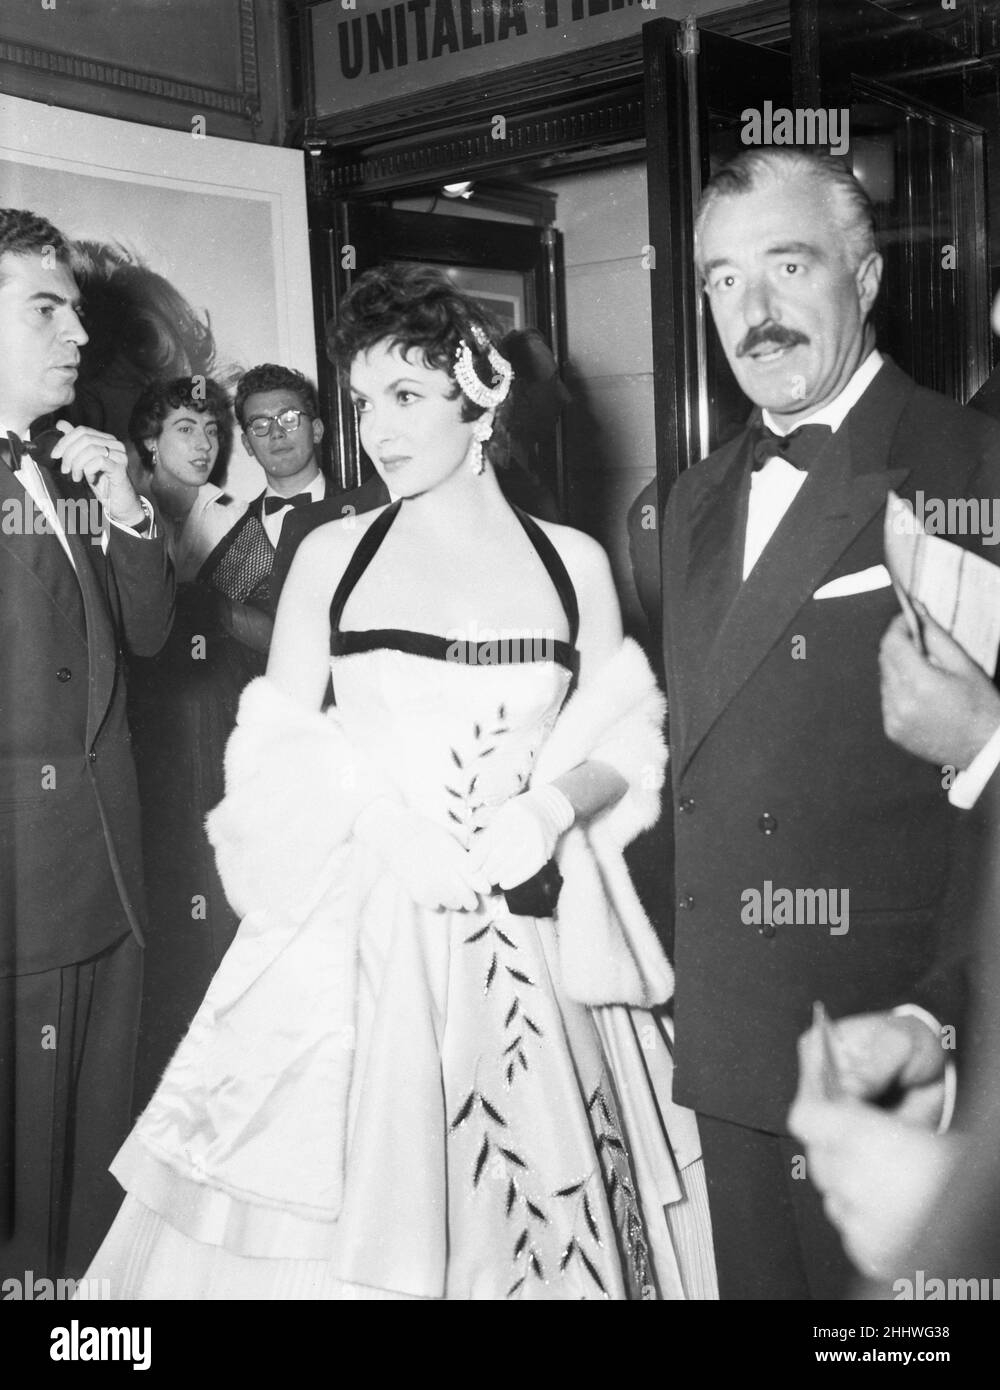 Gina Lollobrigida, Italian Actress, and Vittorio De Sica , film director, attend the opening of the Italian Film Festival at the Tivoli Theatre, The Strand, London, Monday 25th October 1954. Stock Photo